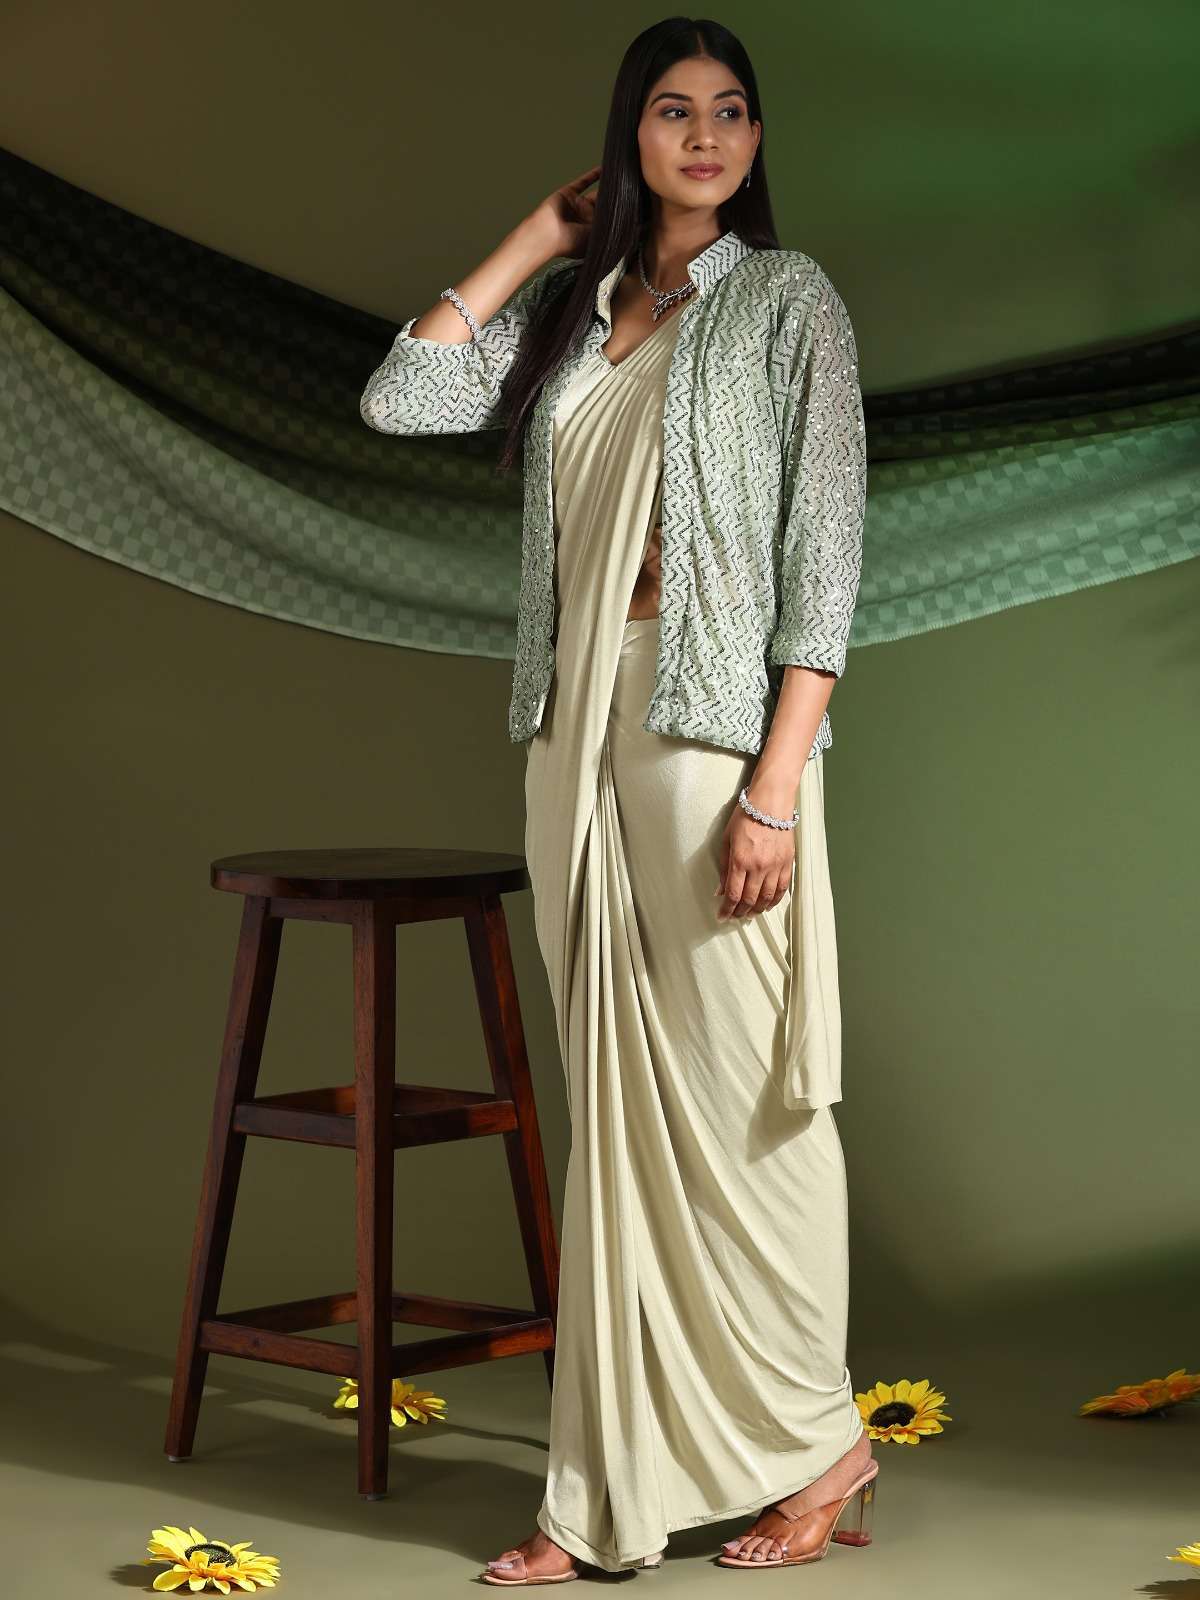 6 Ways To Wear A Jacket With Saree | Fashion in India - Threads | India  fashion, Saree wearing styles, Saree dress